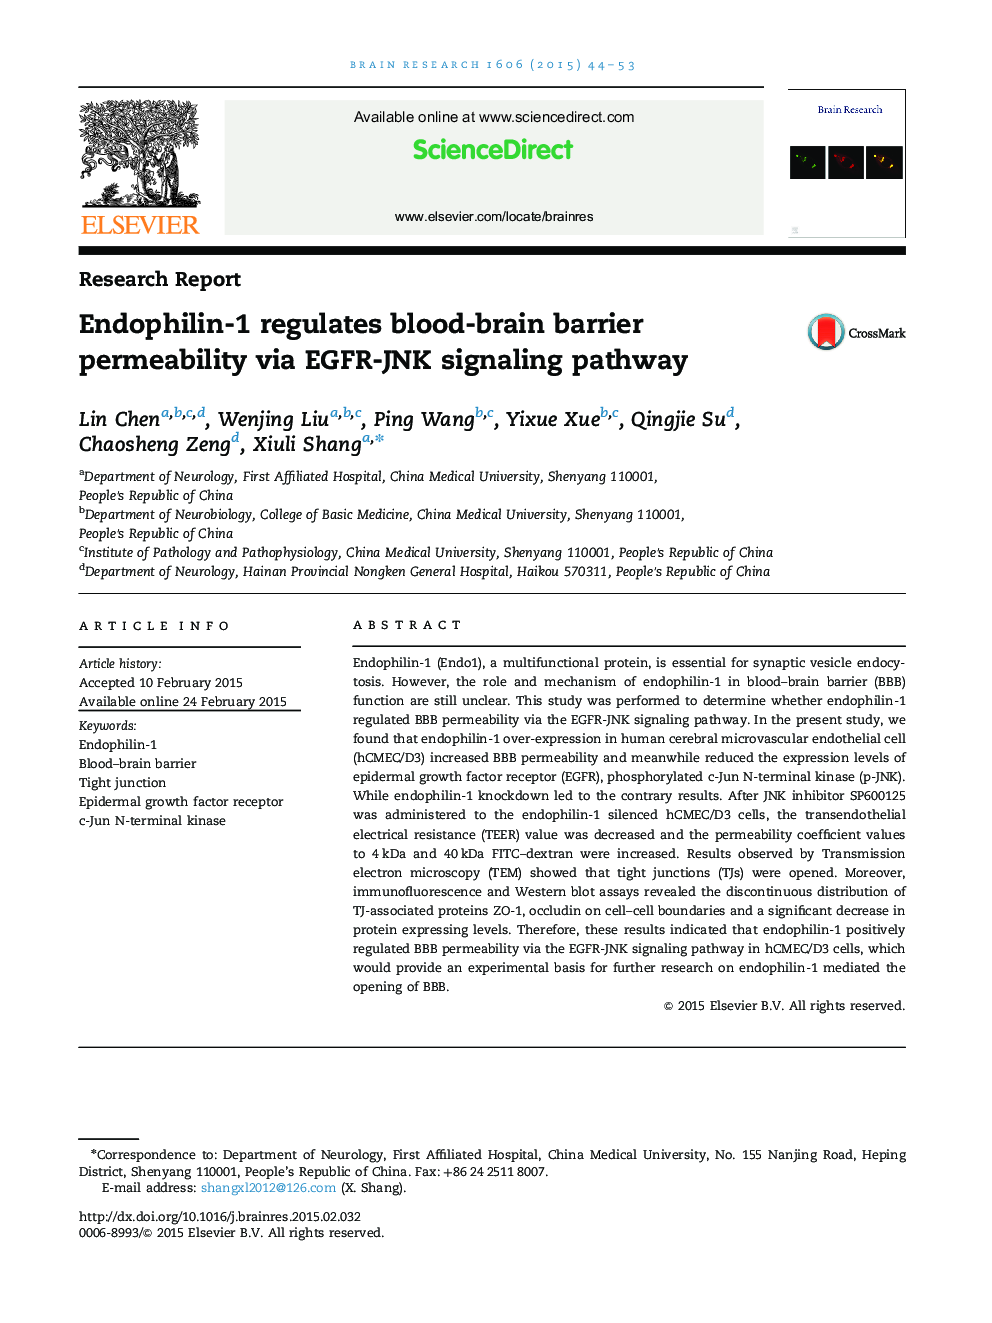 Endophilin-1 regulates blood-brain barrier permeability via EGFR-JNK signaling pathway